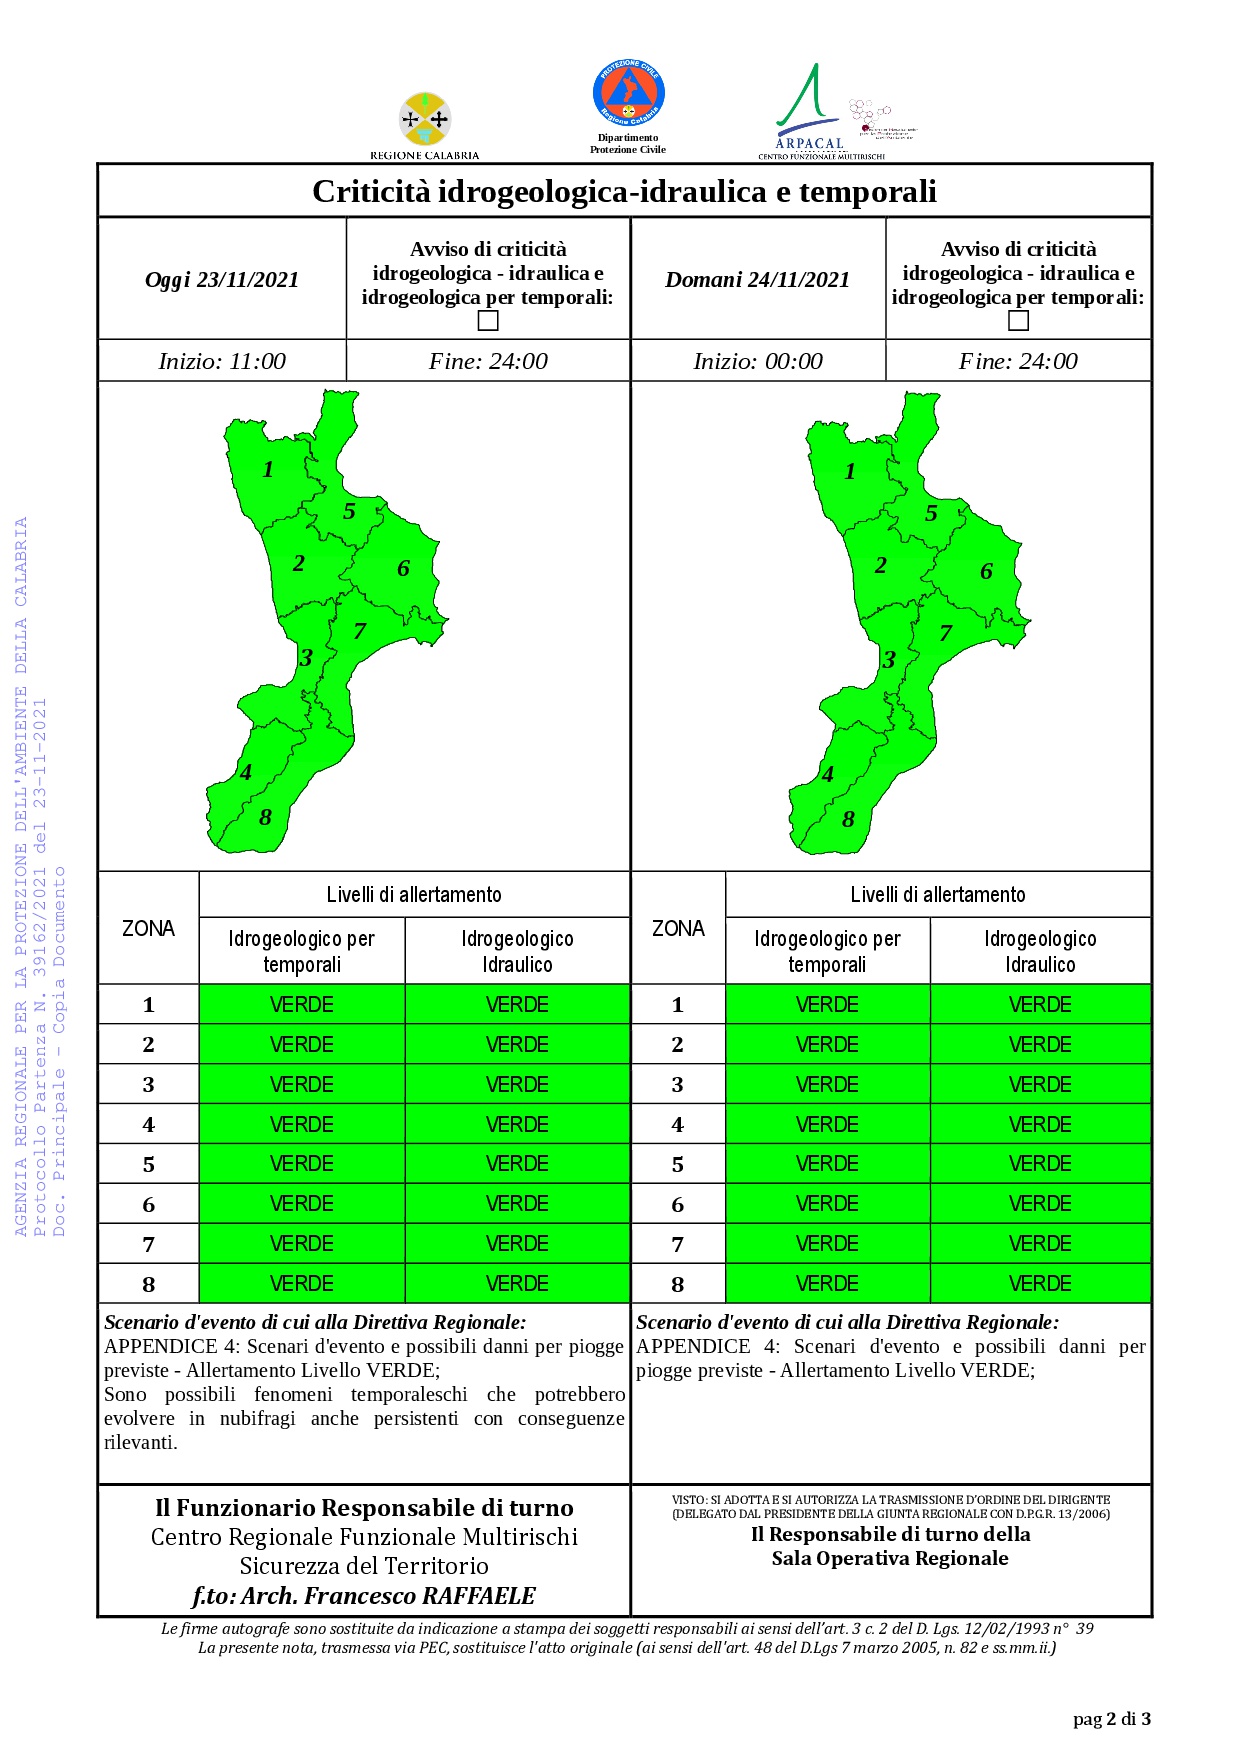 Criticità idrogeologica-idraulica e temporali in Calabria 23-11-2021